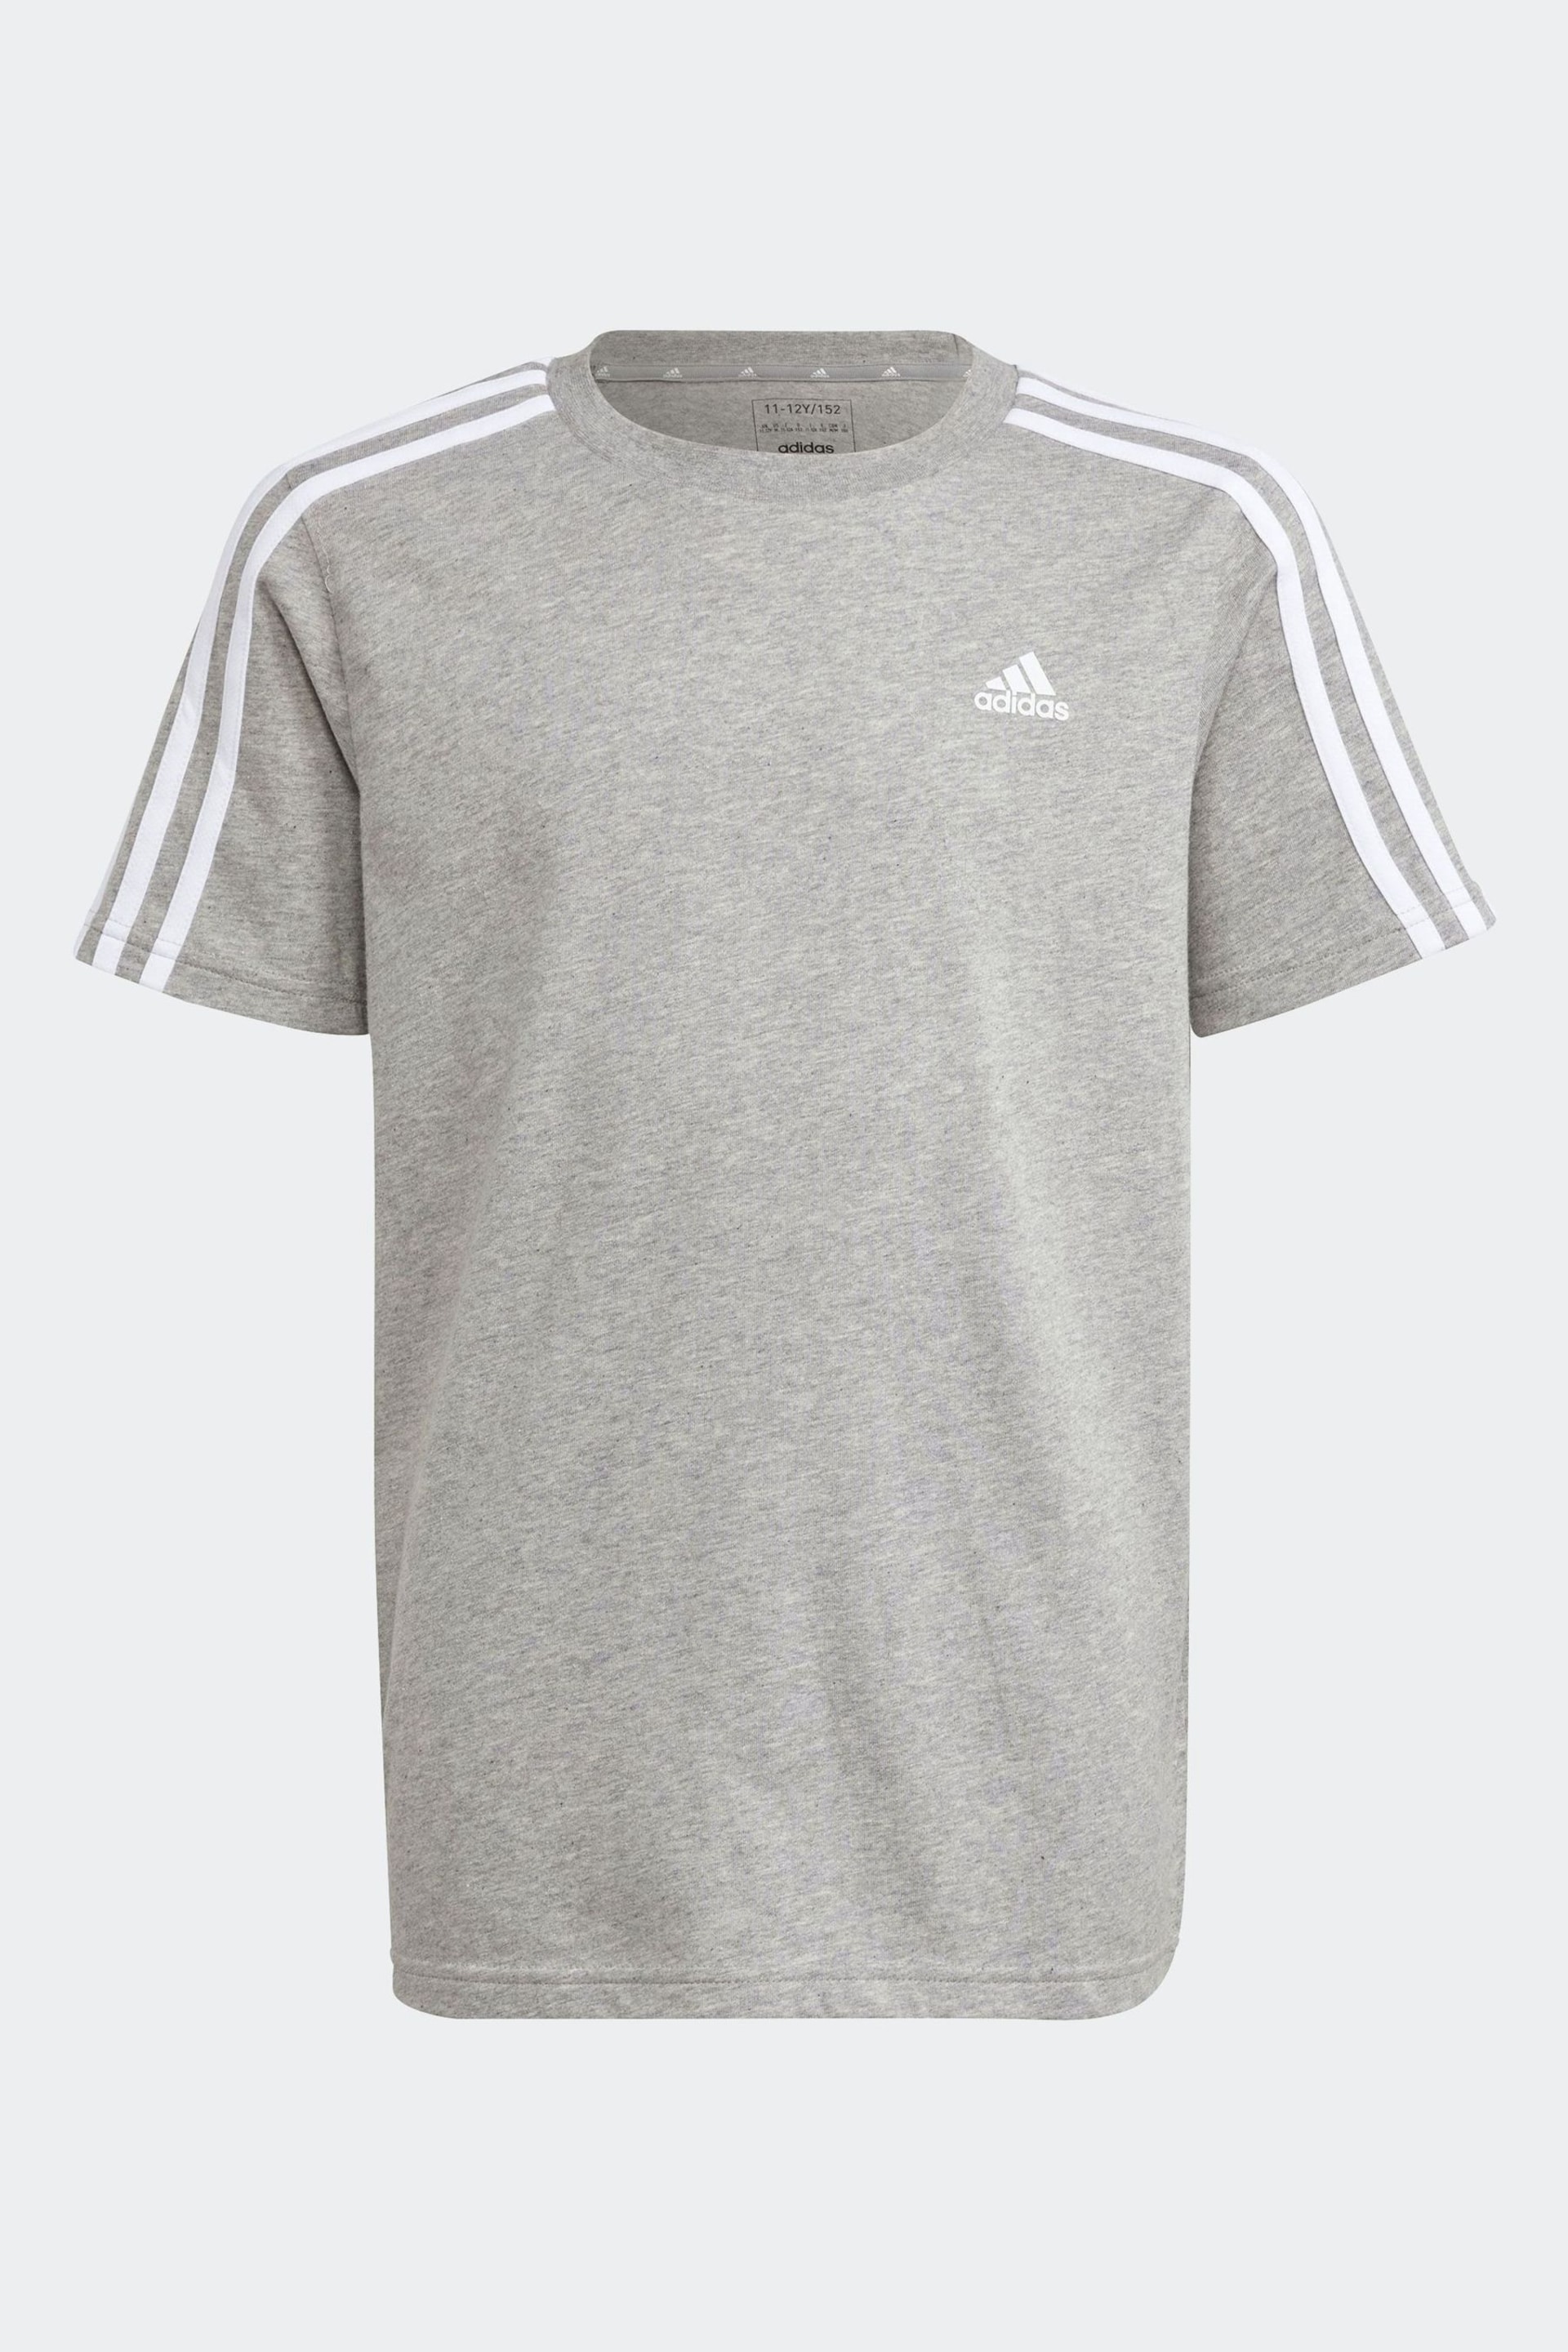 adidas Grey Essentials 3-Stripes Cotton T-Shirt - Image 1 of 5